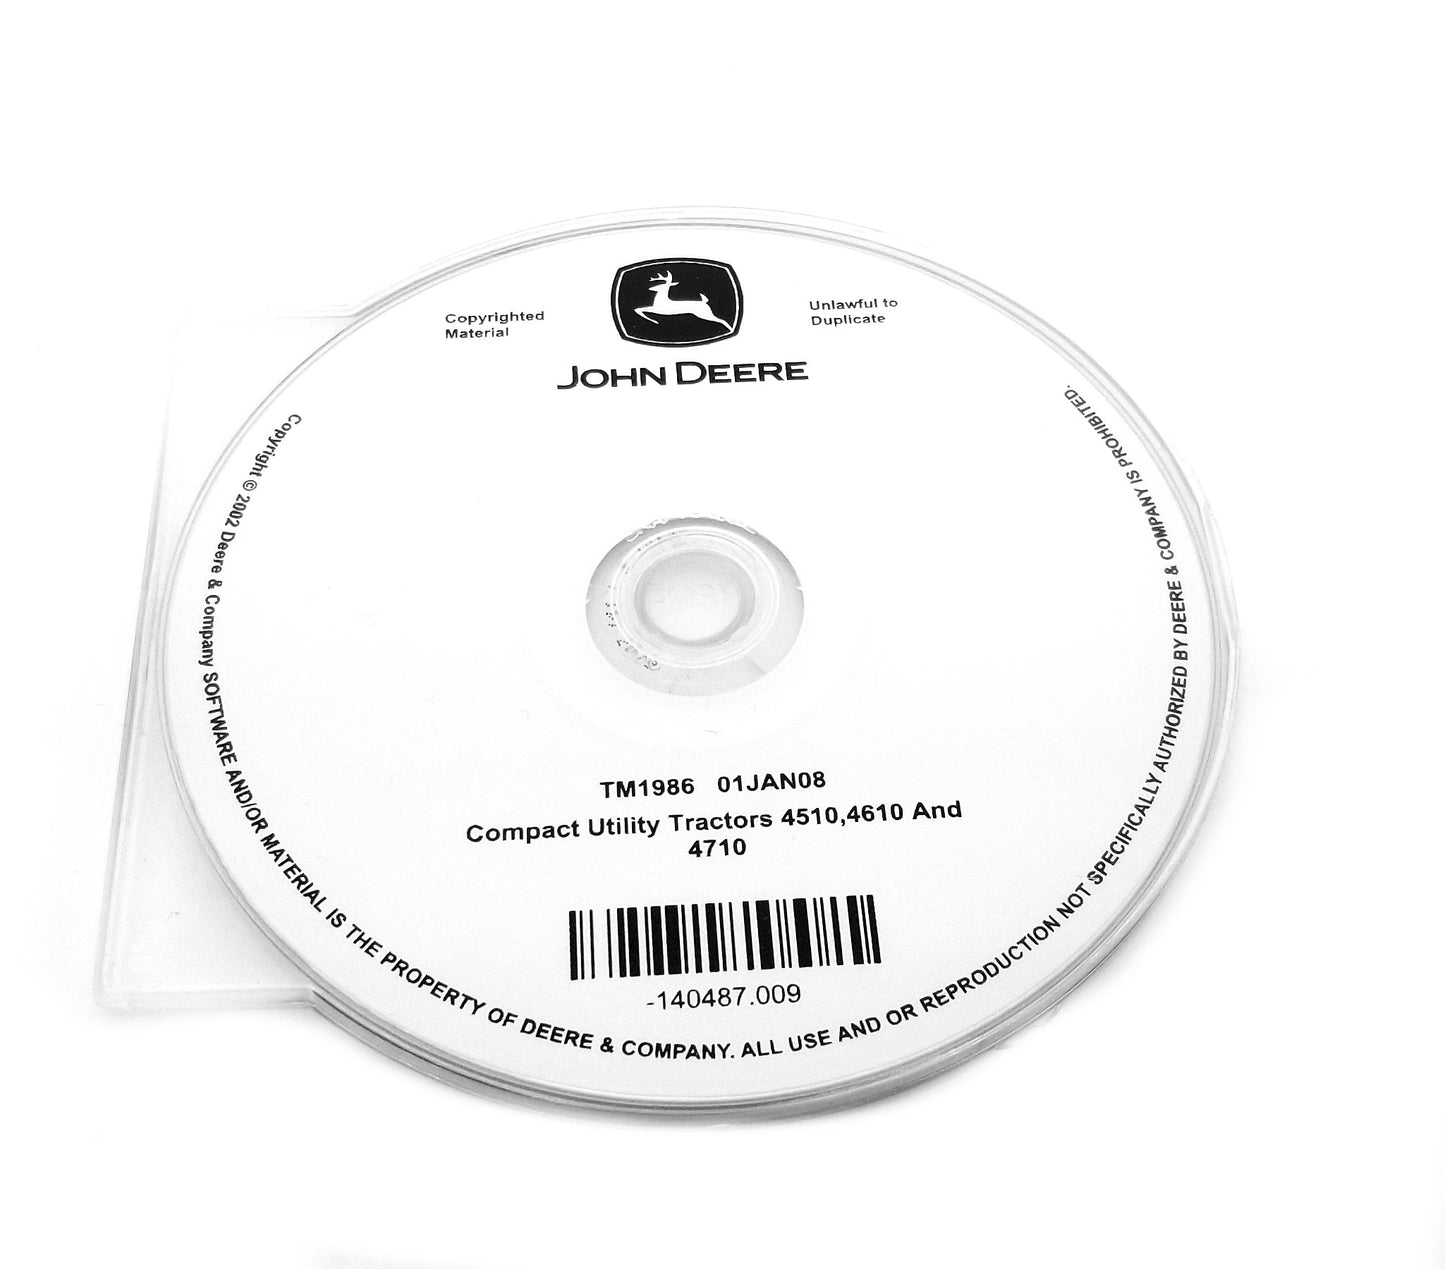 John Deere 4510/4610/4710 Compact Utility Tractor Technical Manual CD - TM1986CD